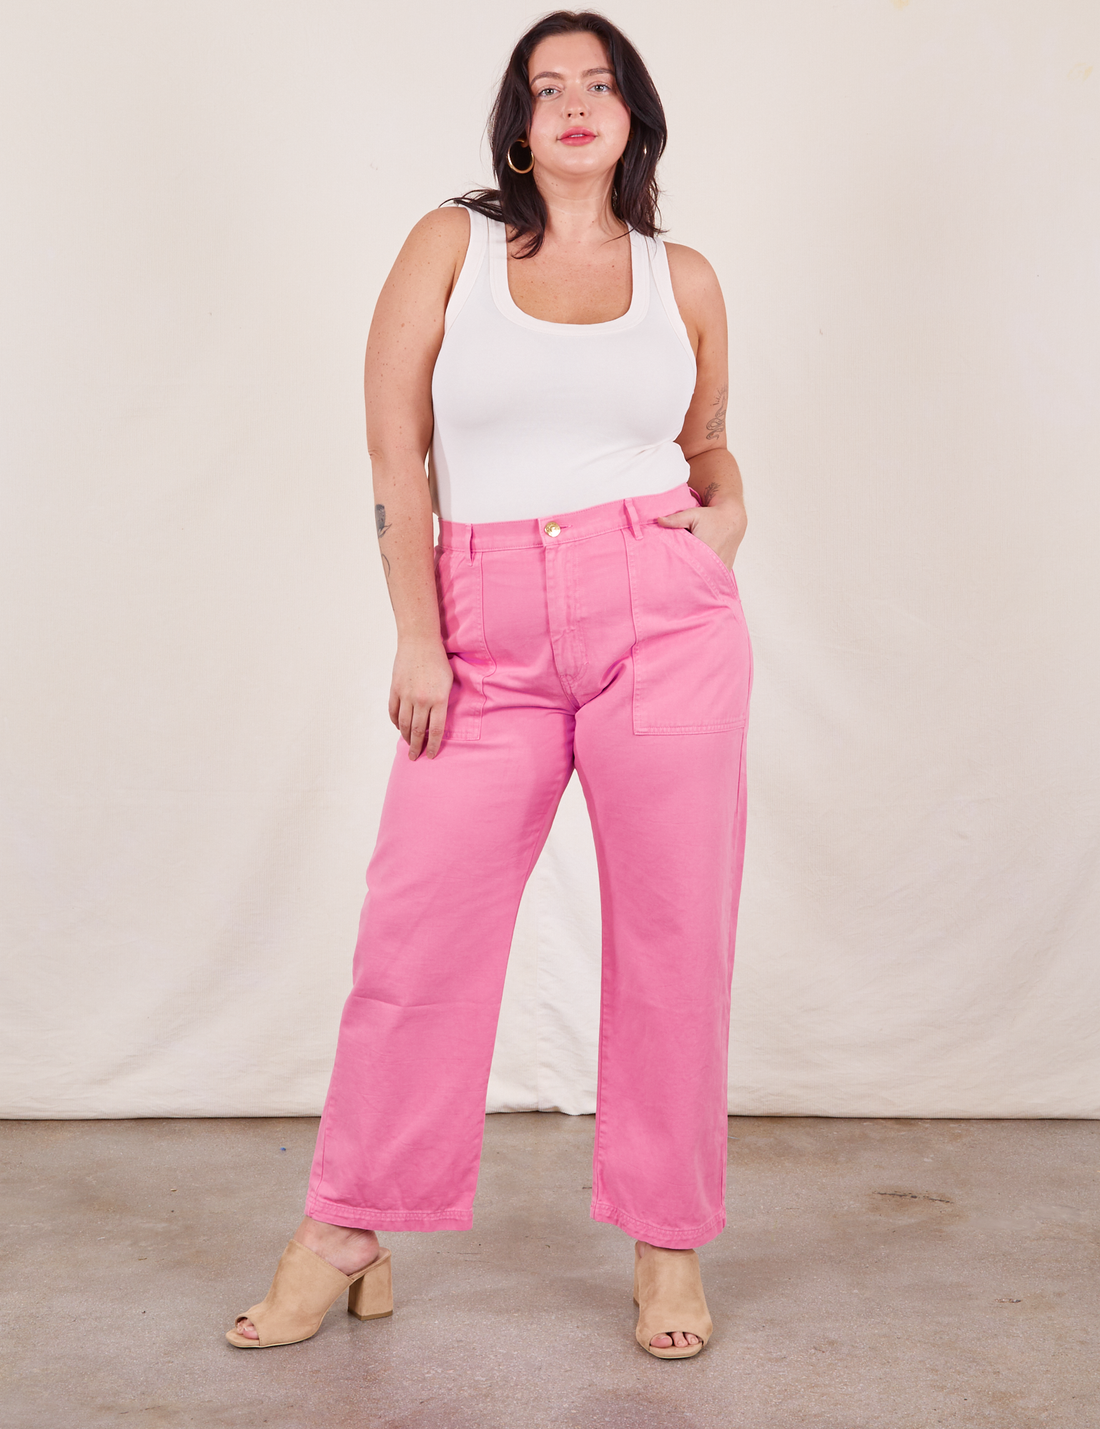 Work Pants in Bubblegum Pink on Faye wearing vintage off-white Tank Top